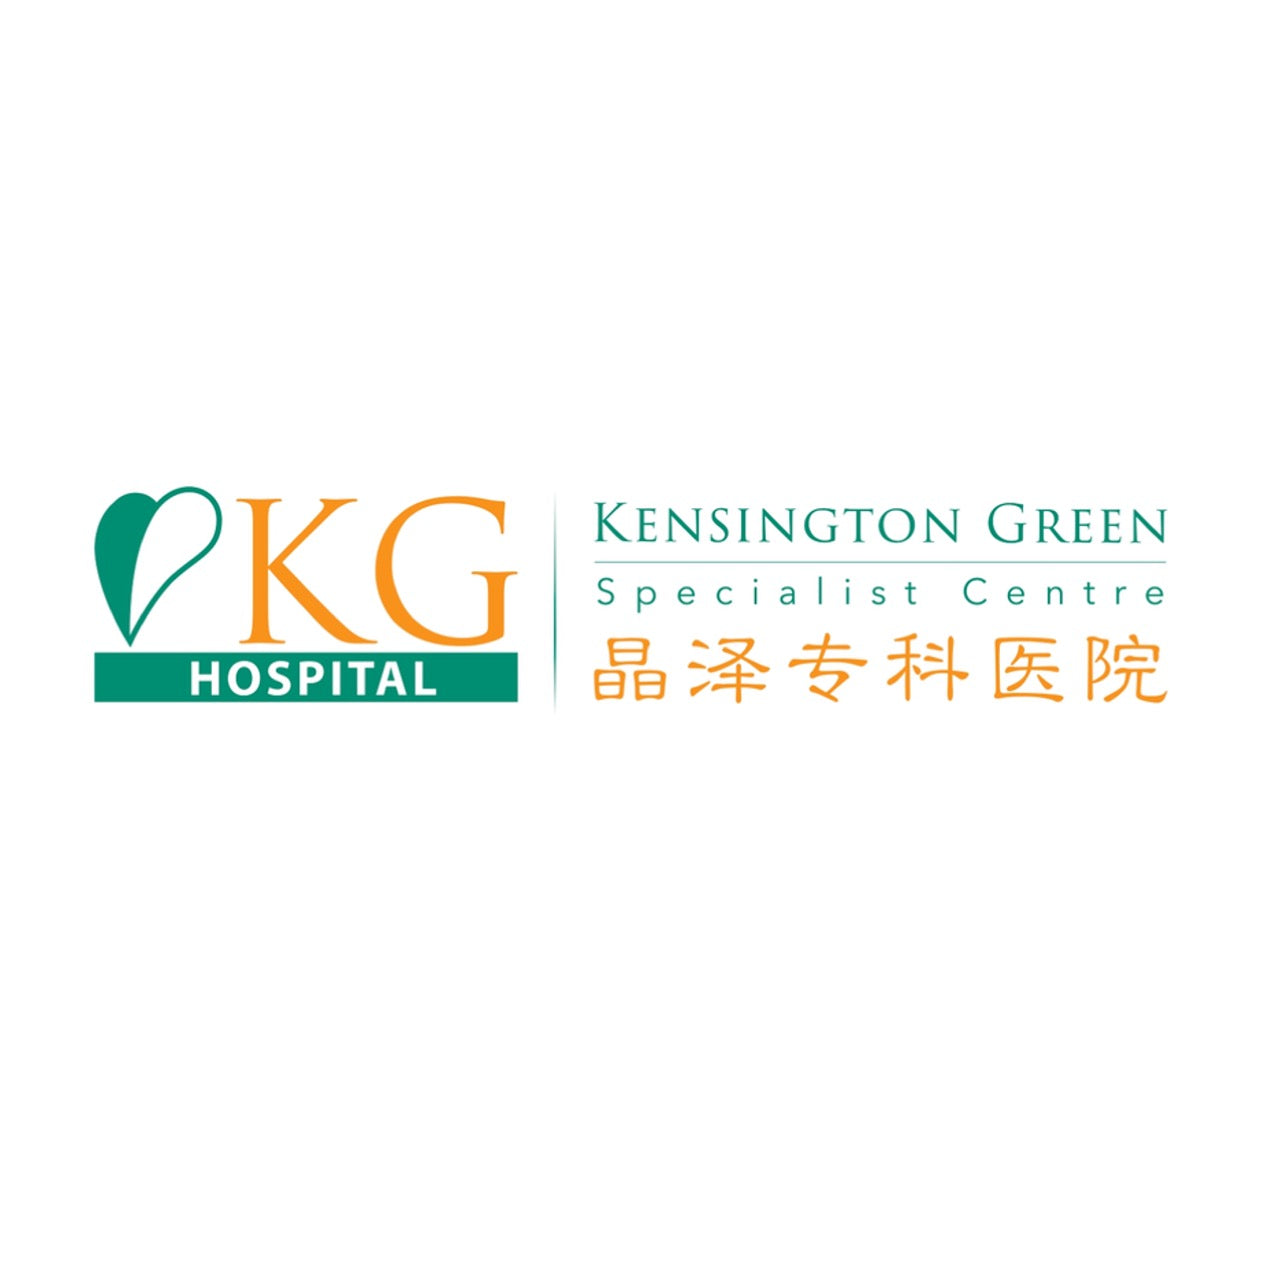 “Kensington-green-specialist-centre”